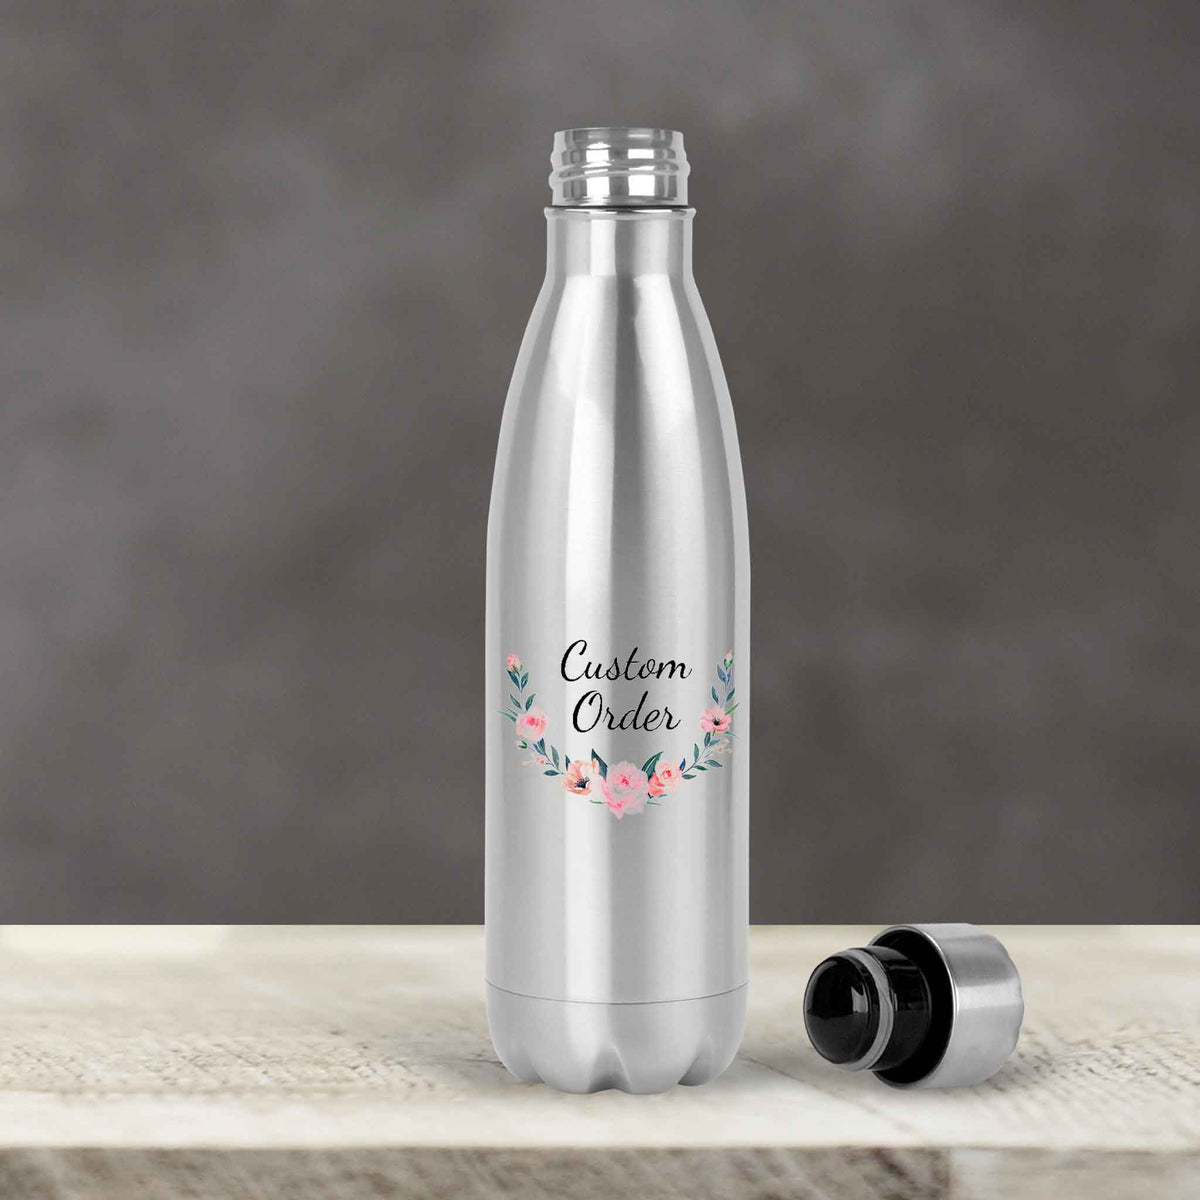 Personalized Water Bottles | Custom Stainless Steel Water Bottles | 20 0z | Custom Order